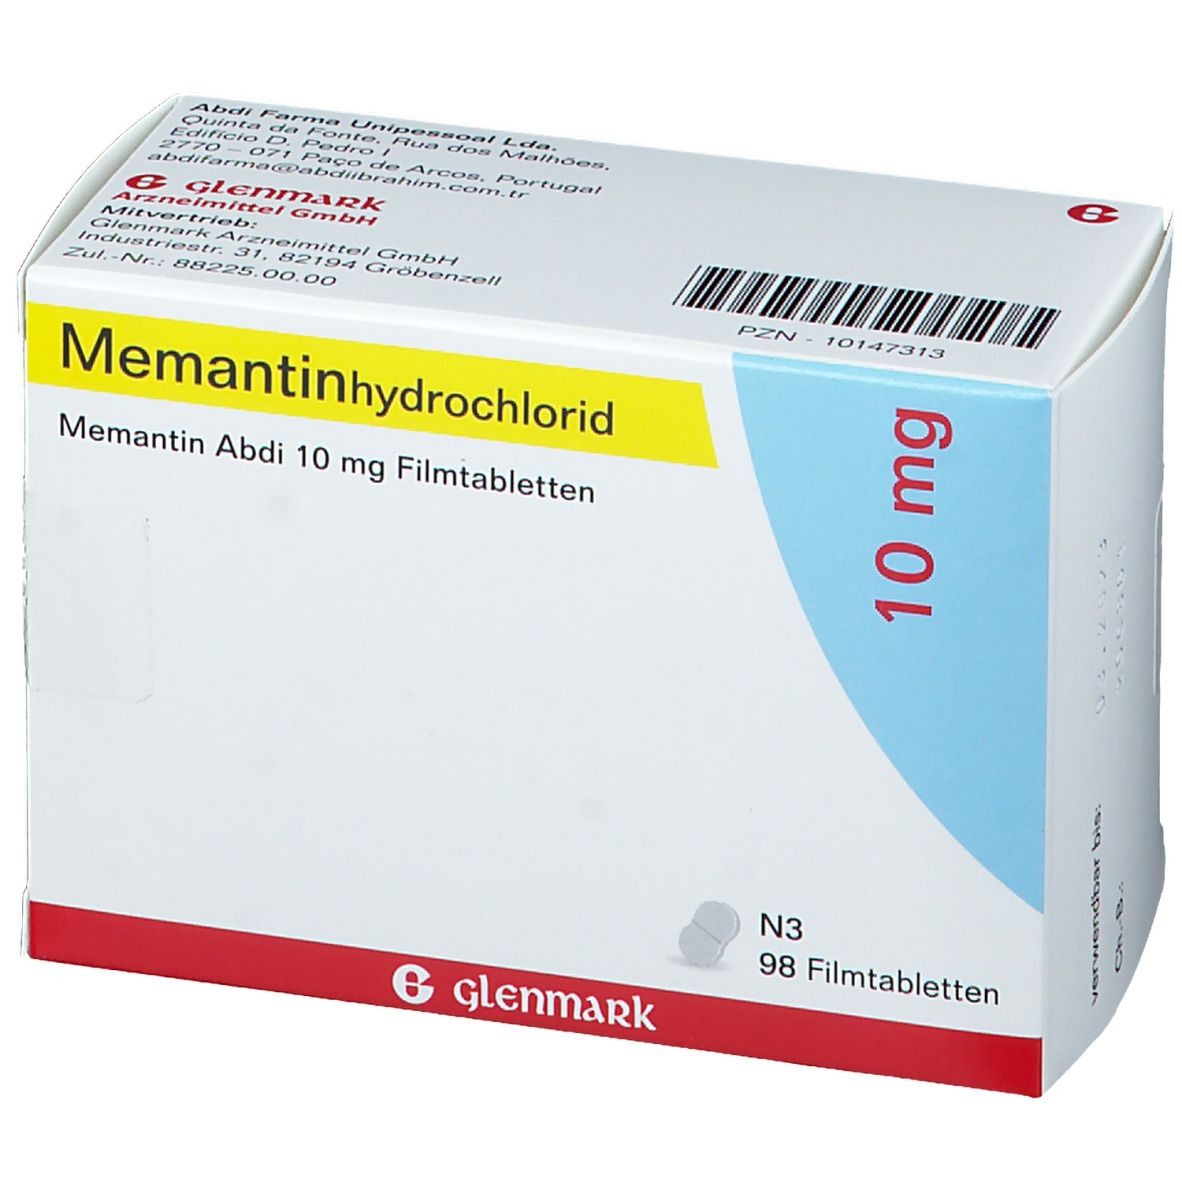 Memantin Abdi 10 mg